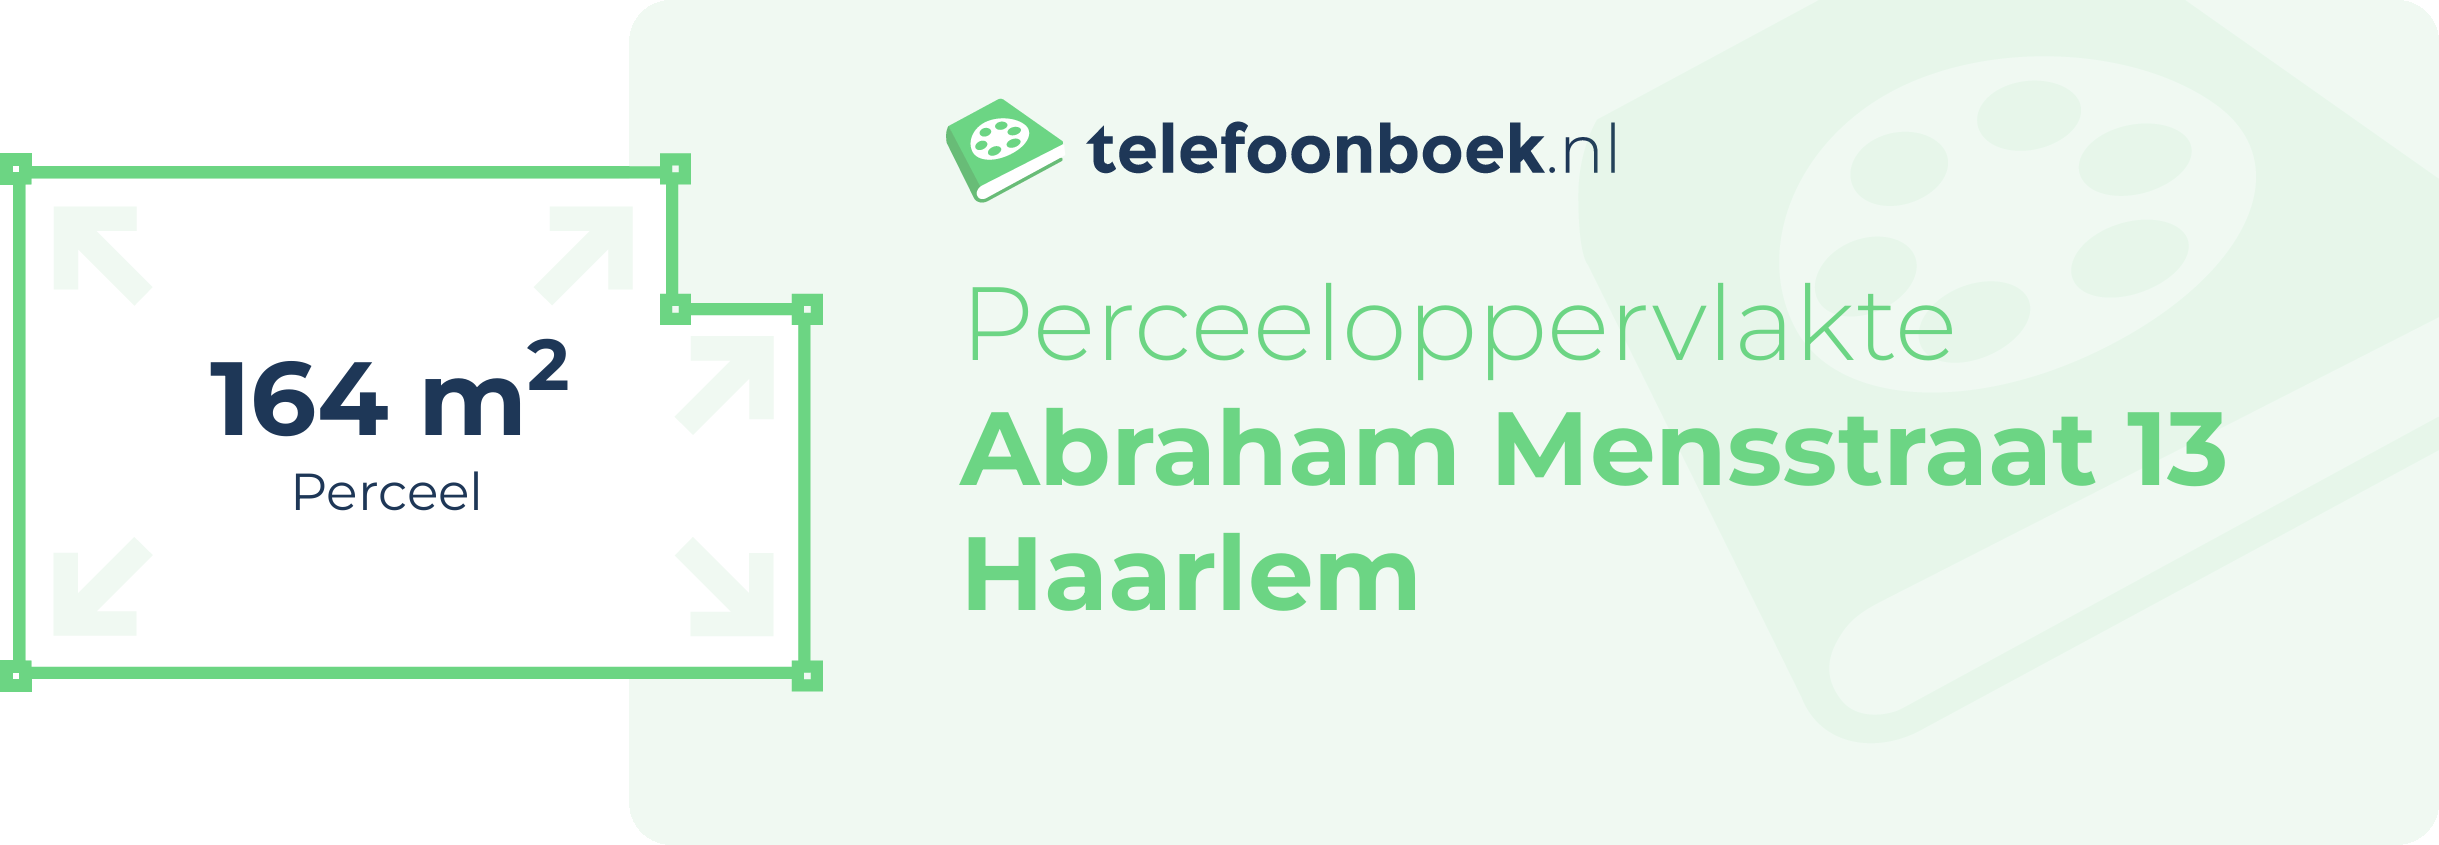 Perceeloppervlakte Abraham Mensstraat 13 Haarlem